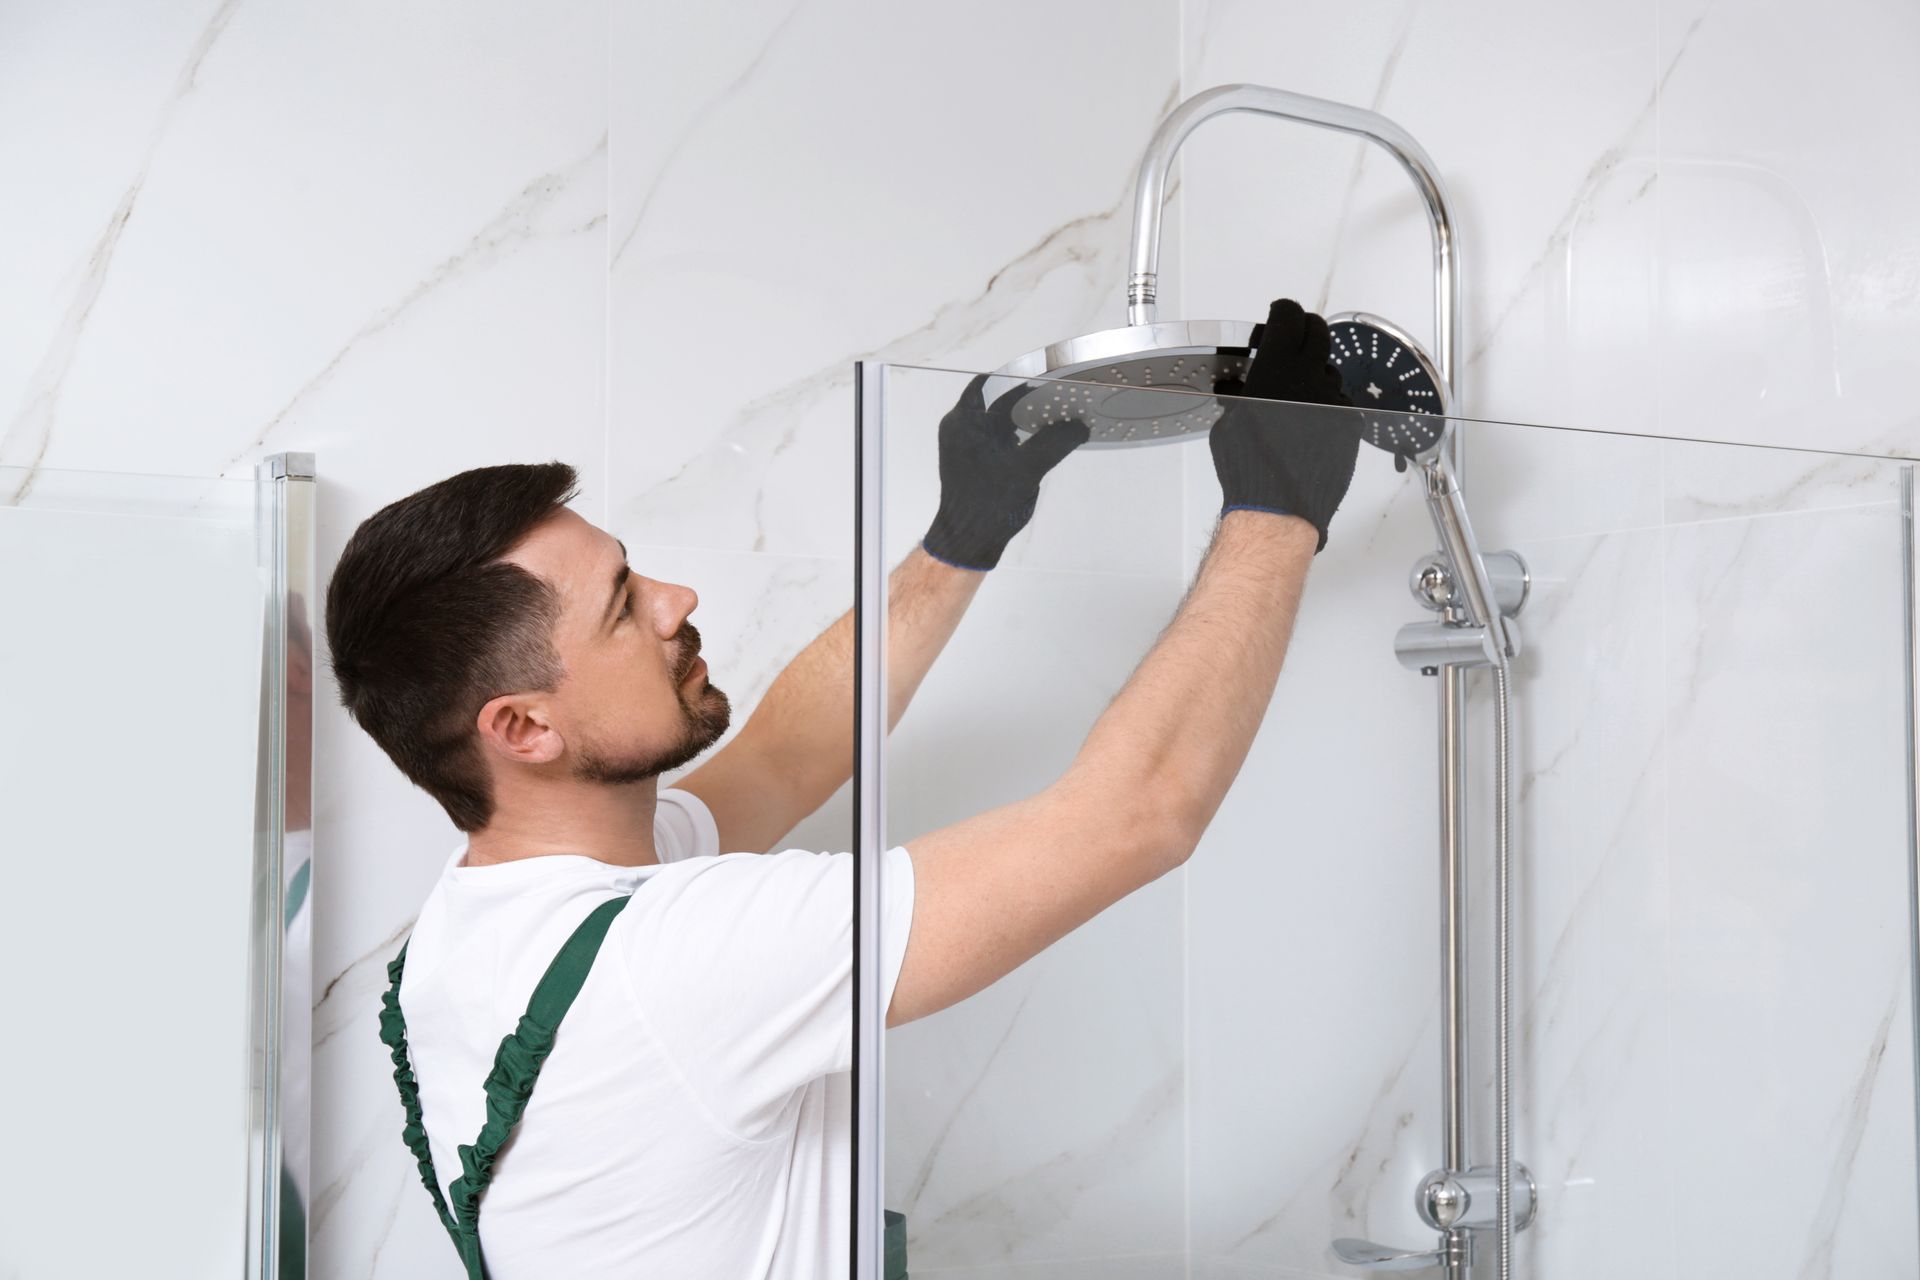 a man is installing a shower head in a bathroom .